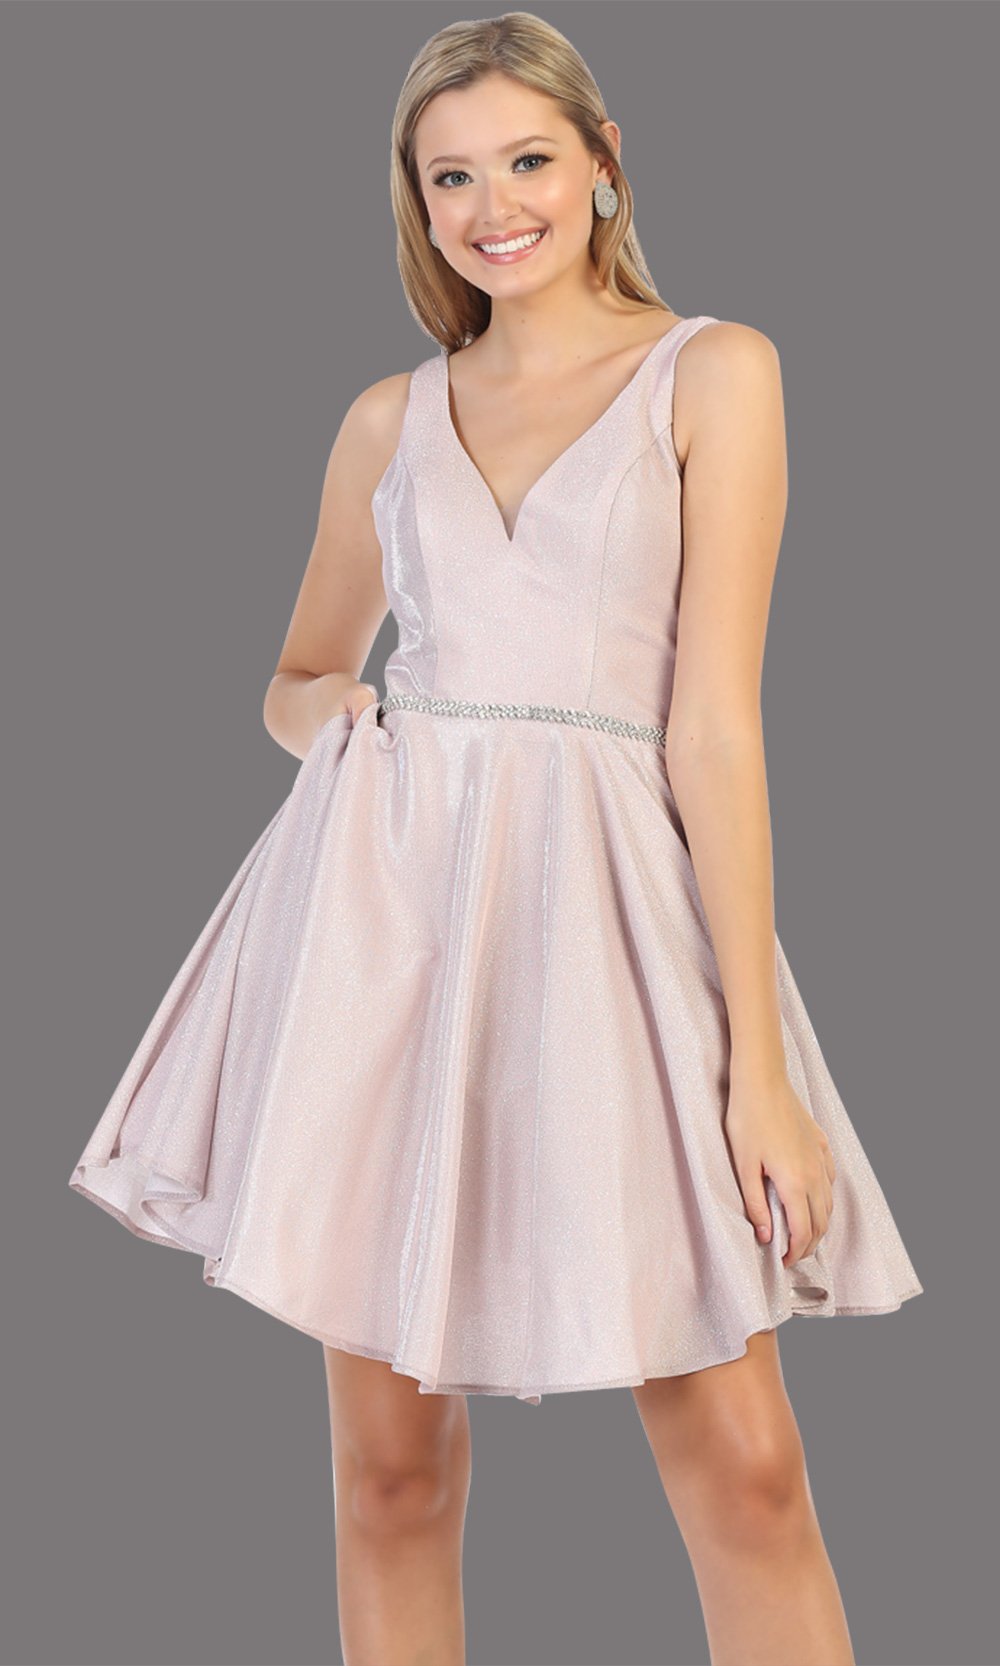 Sequin-Embellished Sleeveless Long Prom Dress 4323